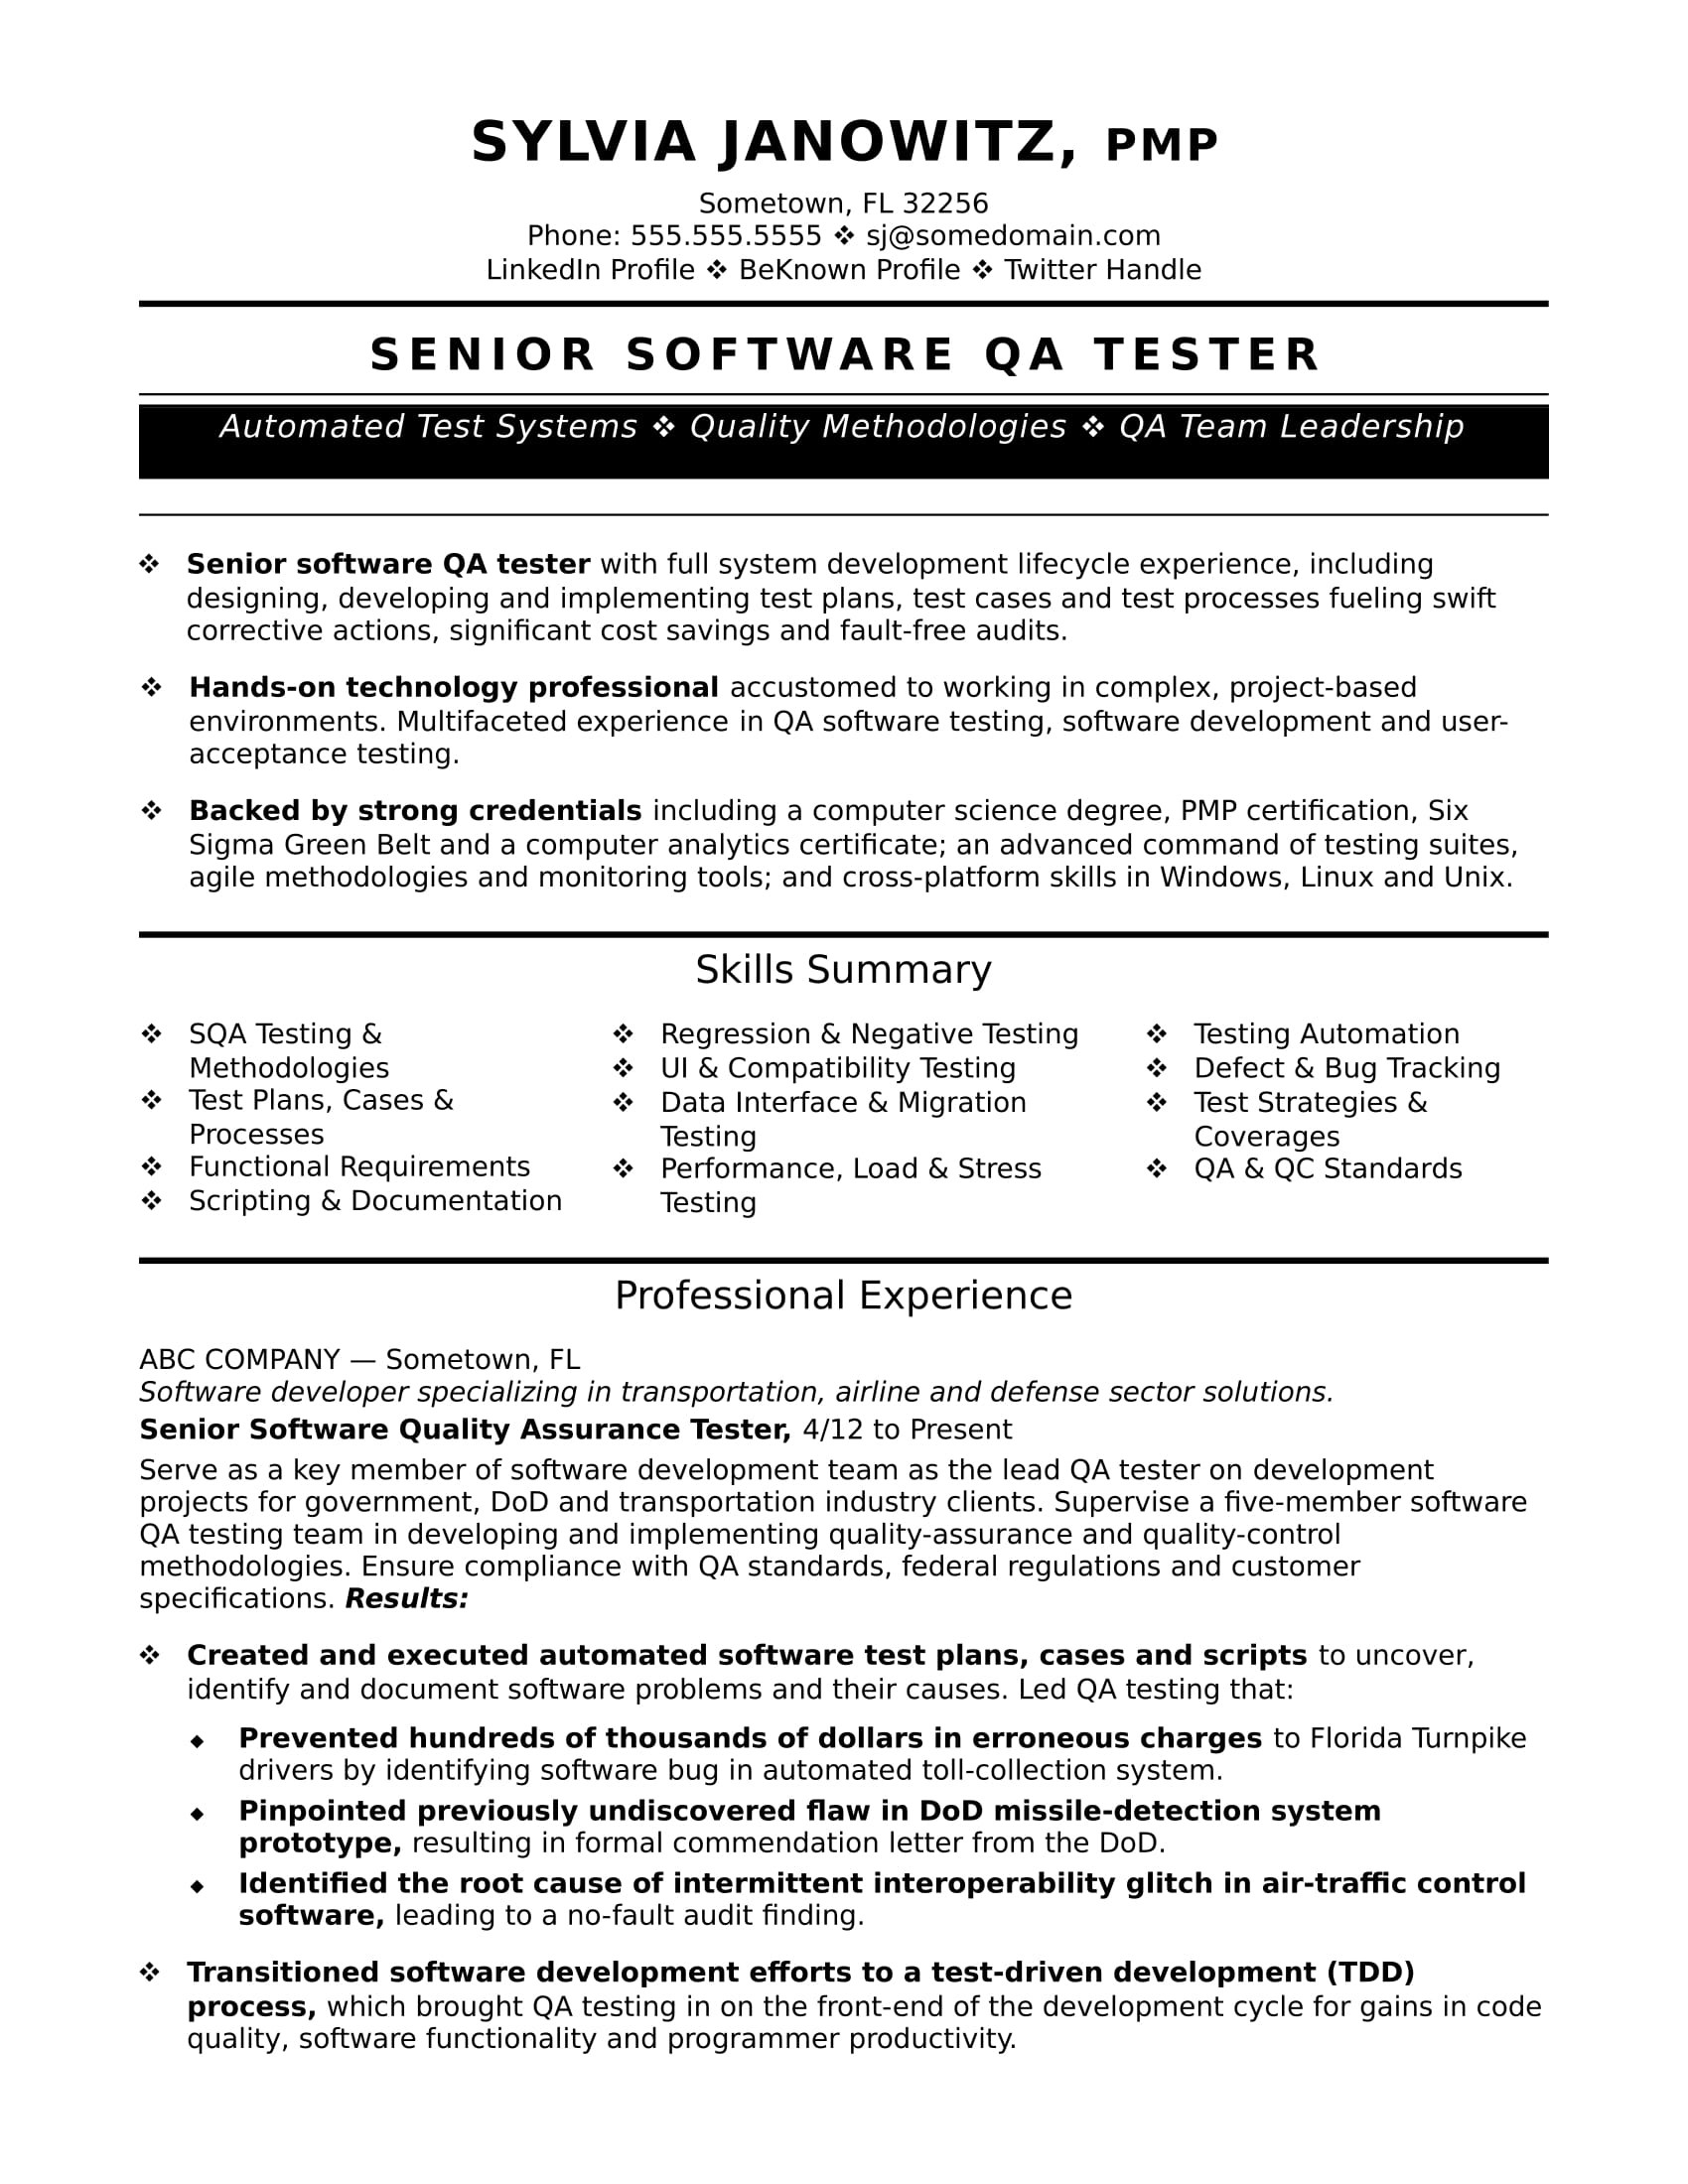 Sample Qa Test Lead Resume In Usa format Experienced Qa software Tester Resume Sample Monster.com